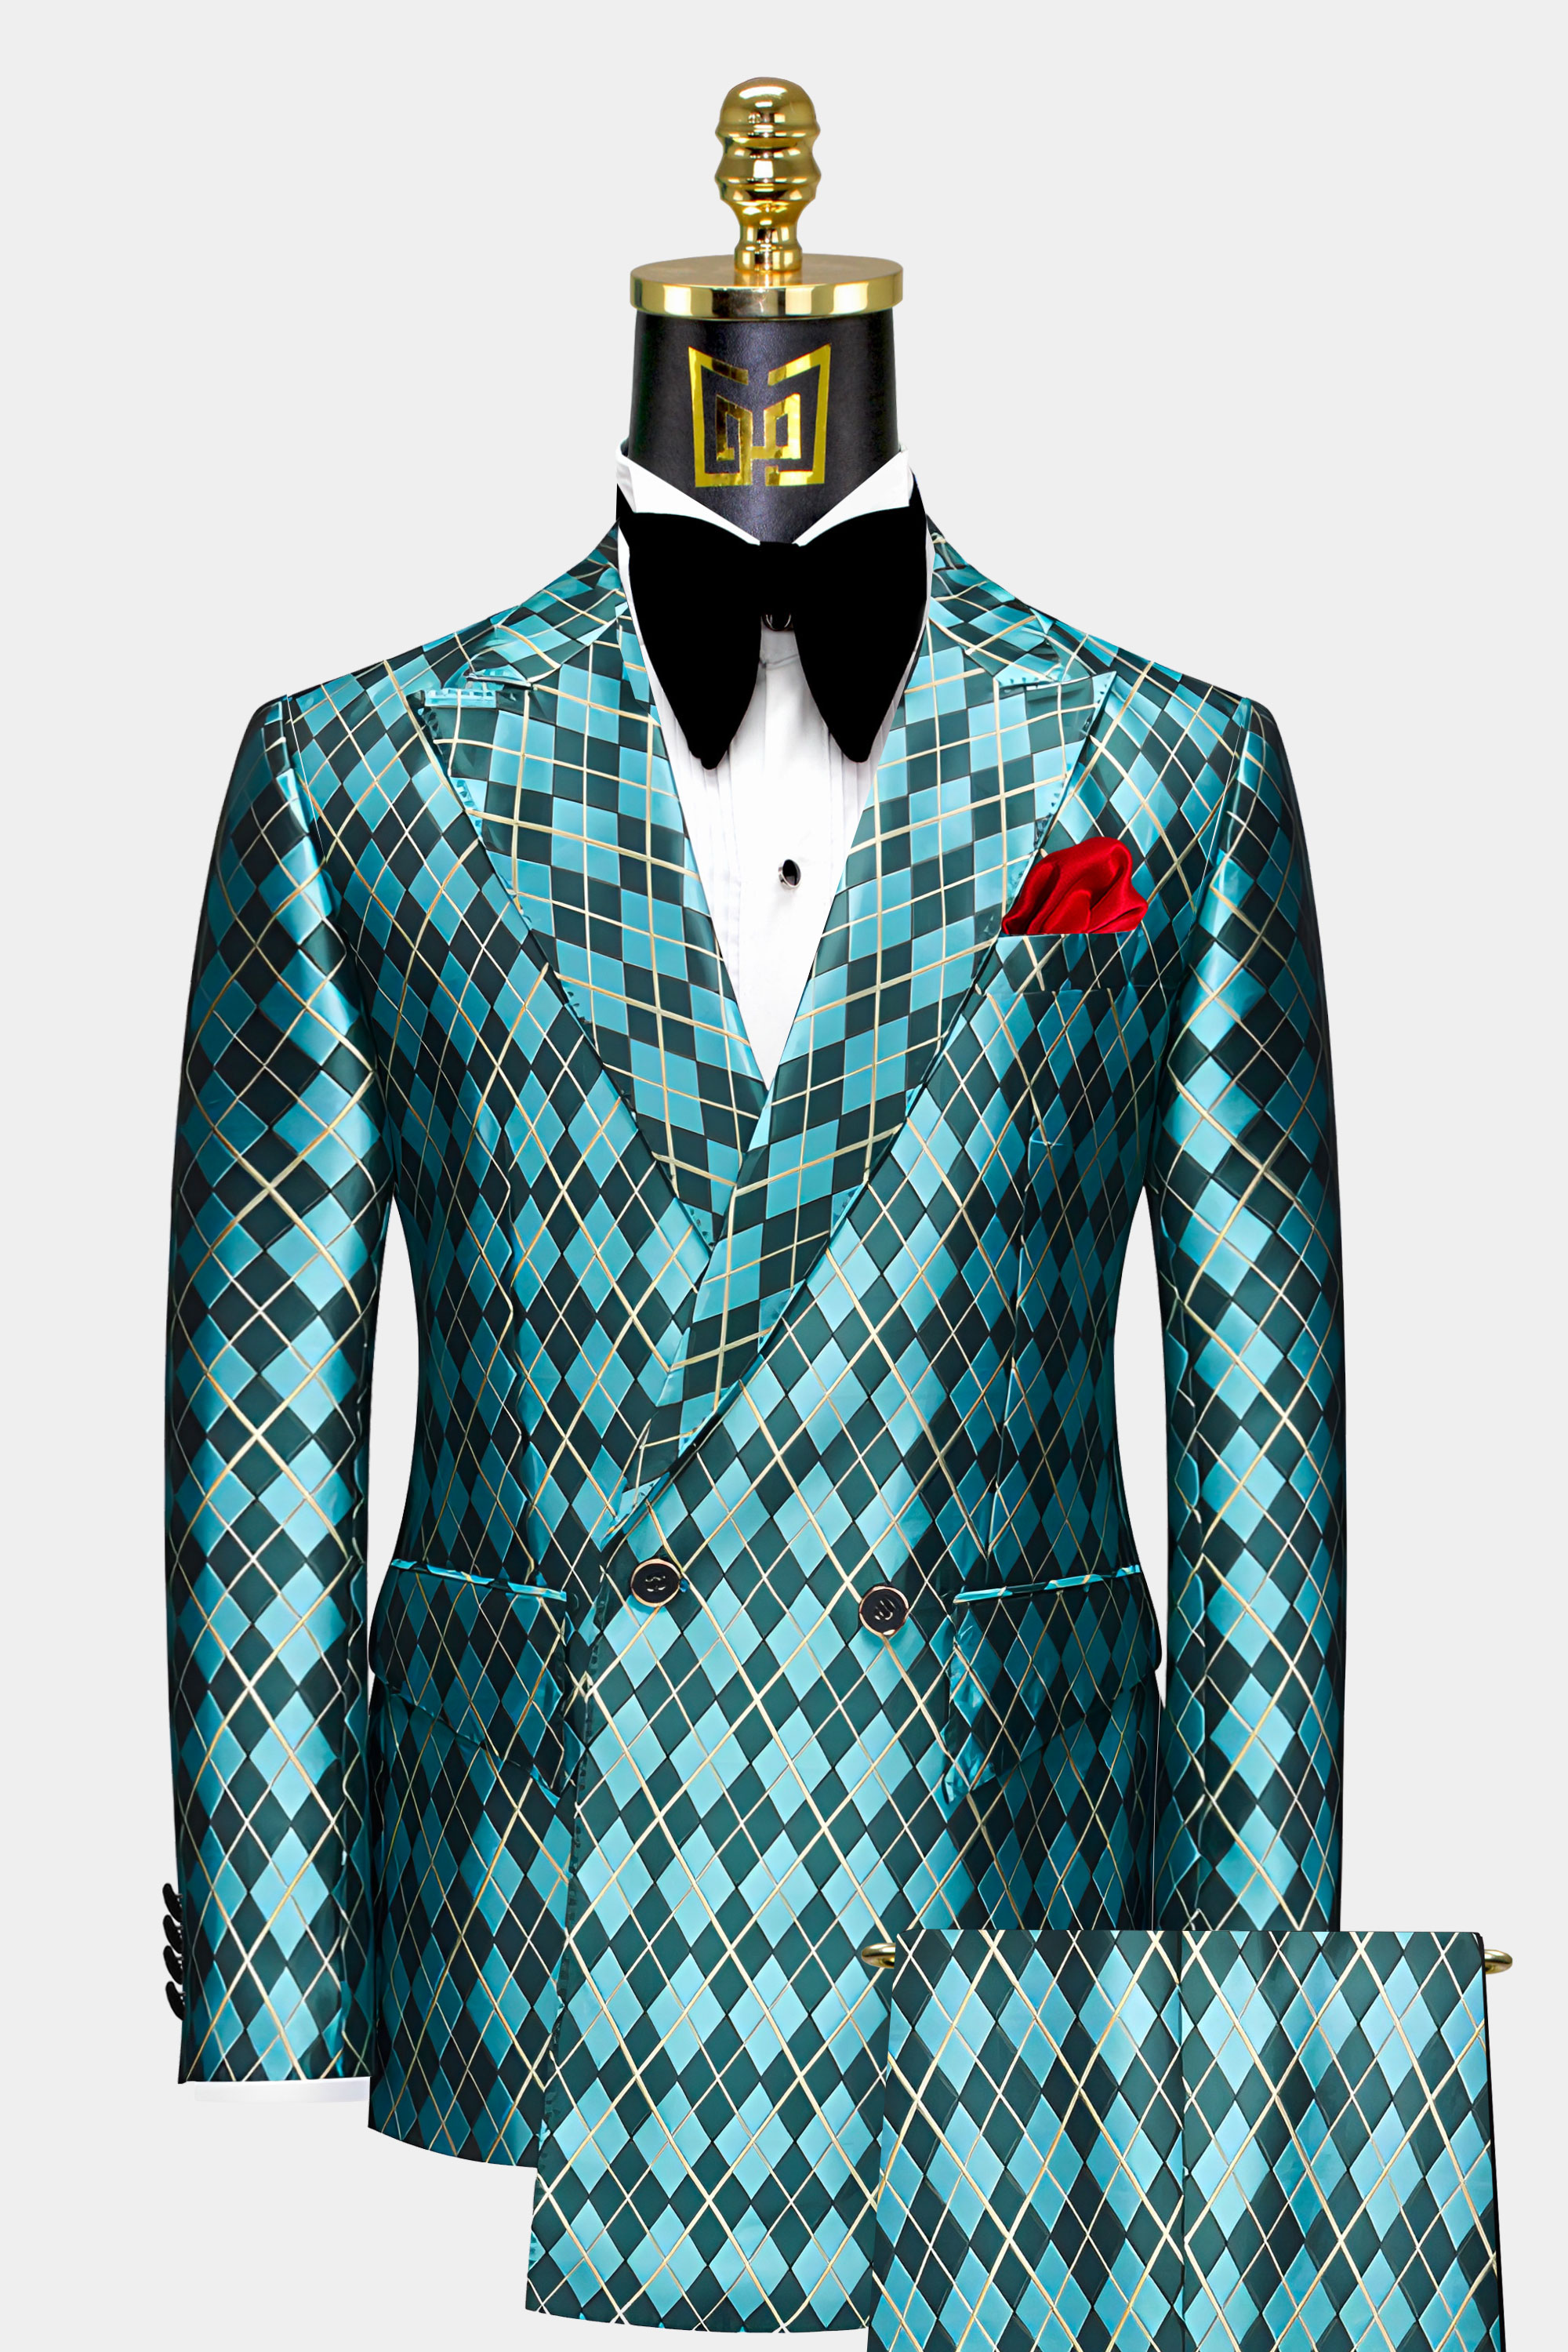 Double-Breasted-Turquoise-Argyle-suit-Morning-Groom-Wedding-Tuxedo-from-Gentlemansguru.com